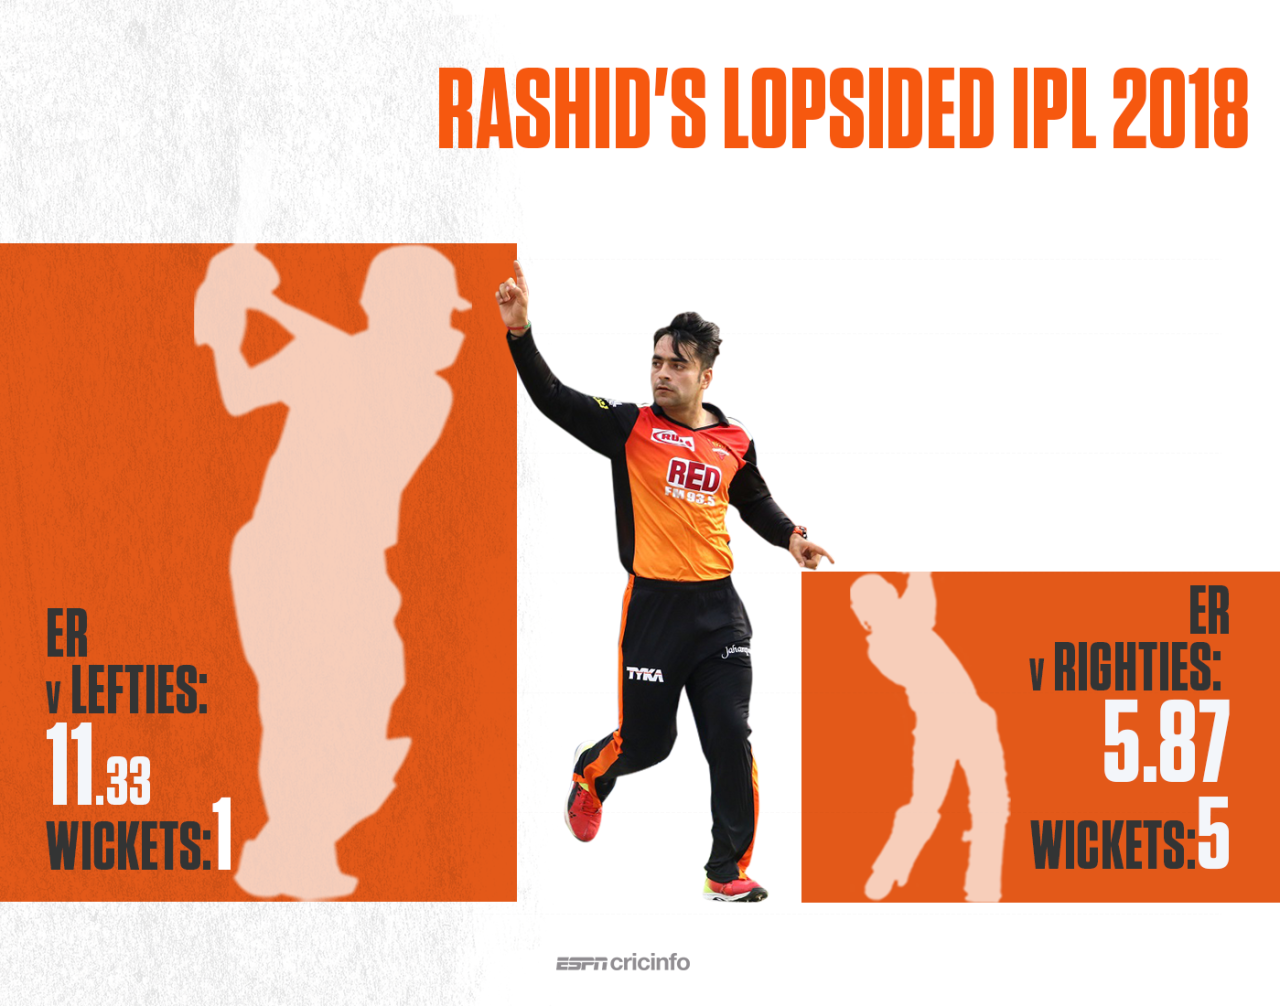 Rashid Khan has been lethal against right-handed batsmen but expensive against lefties, April 25, 2018